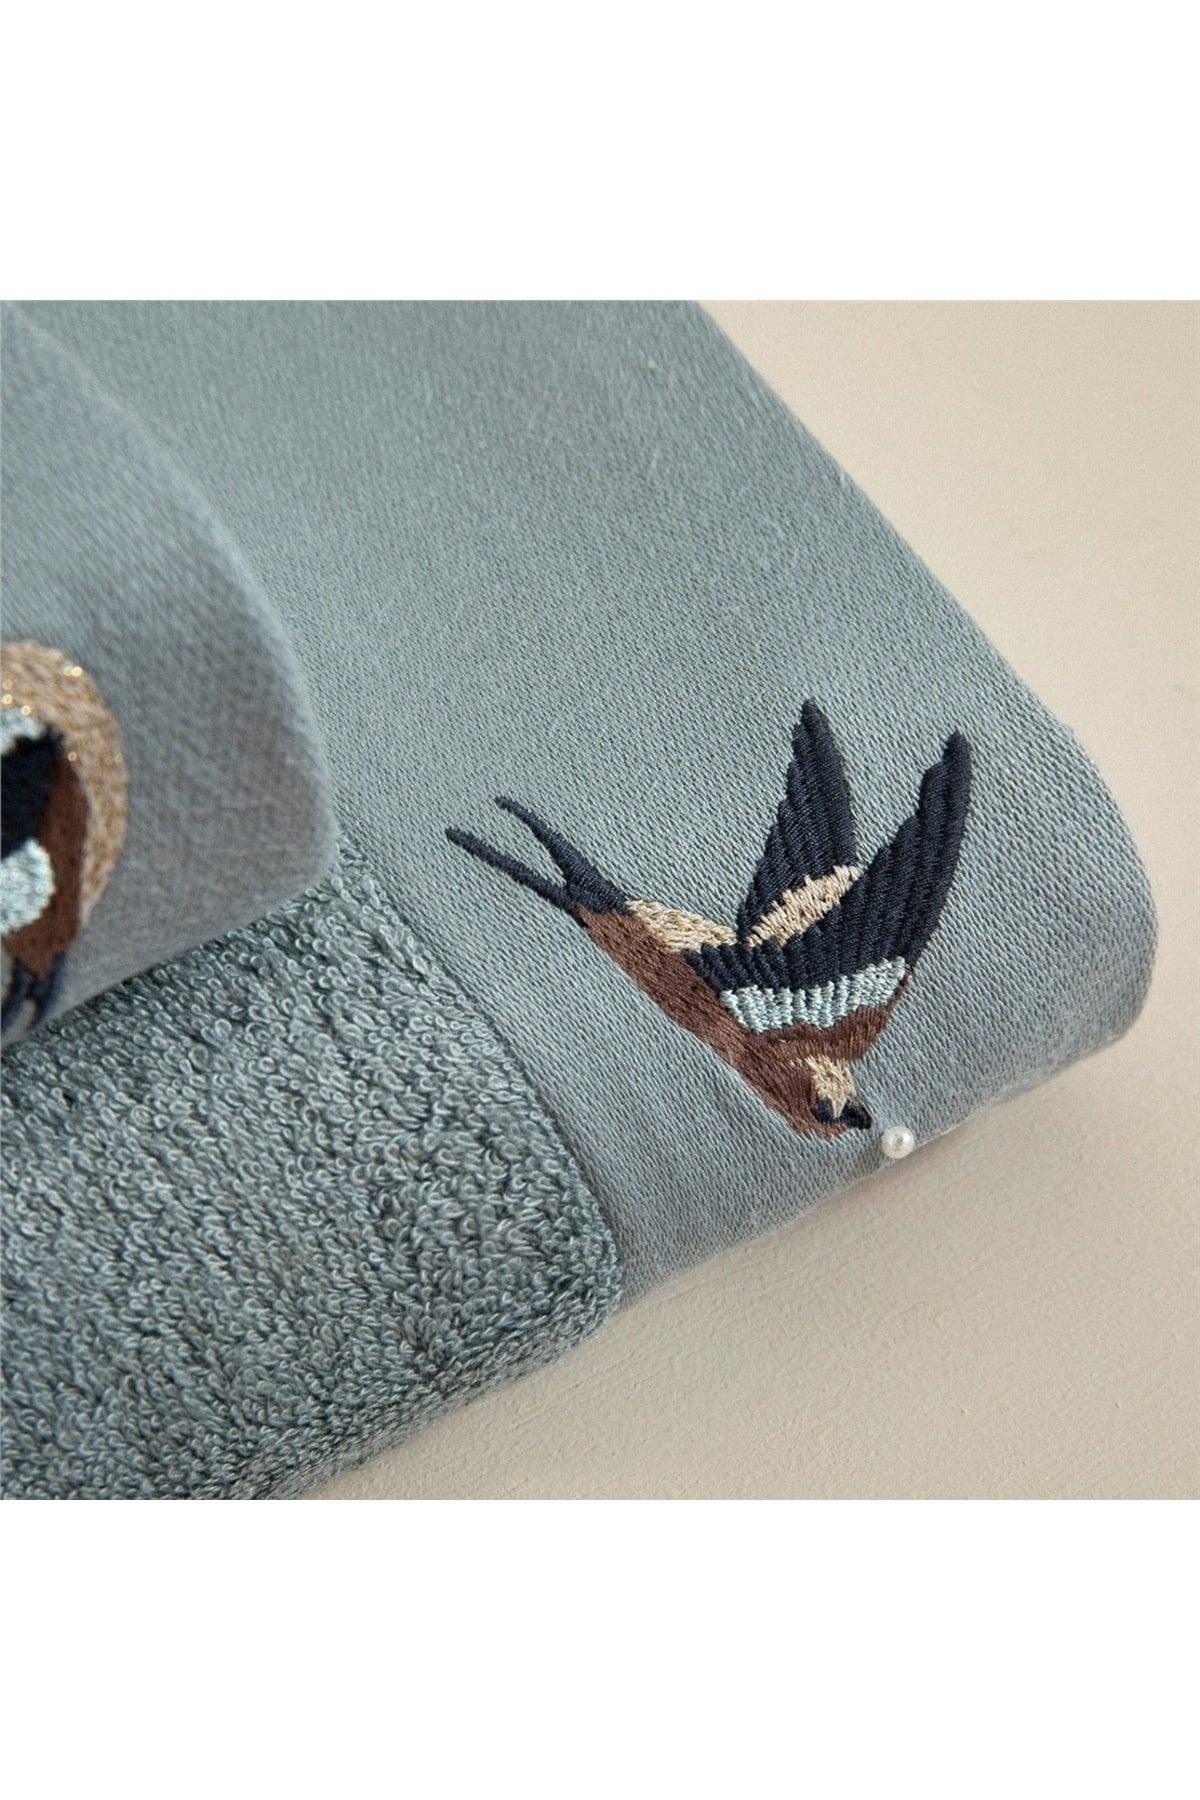 Face Towel 50x90cm - Swordslife